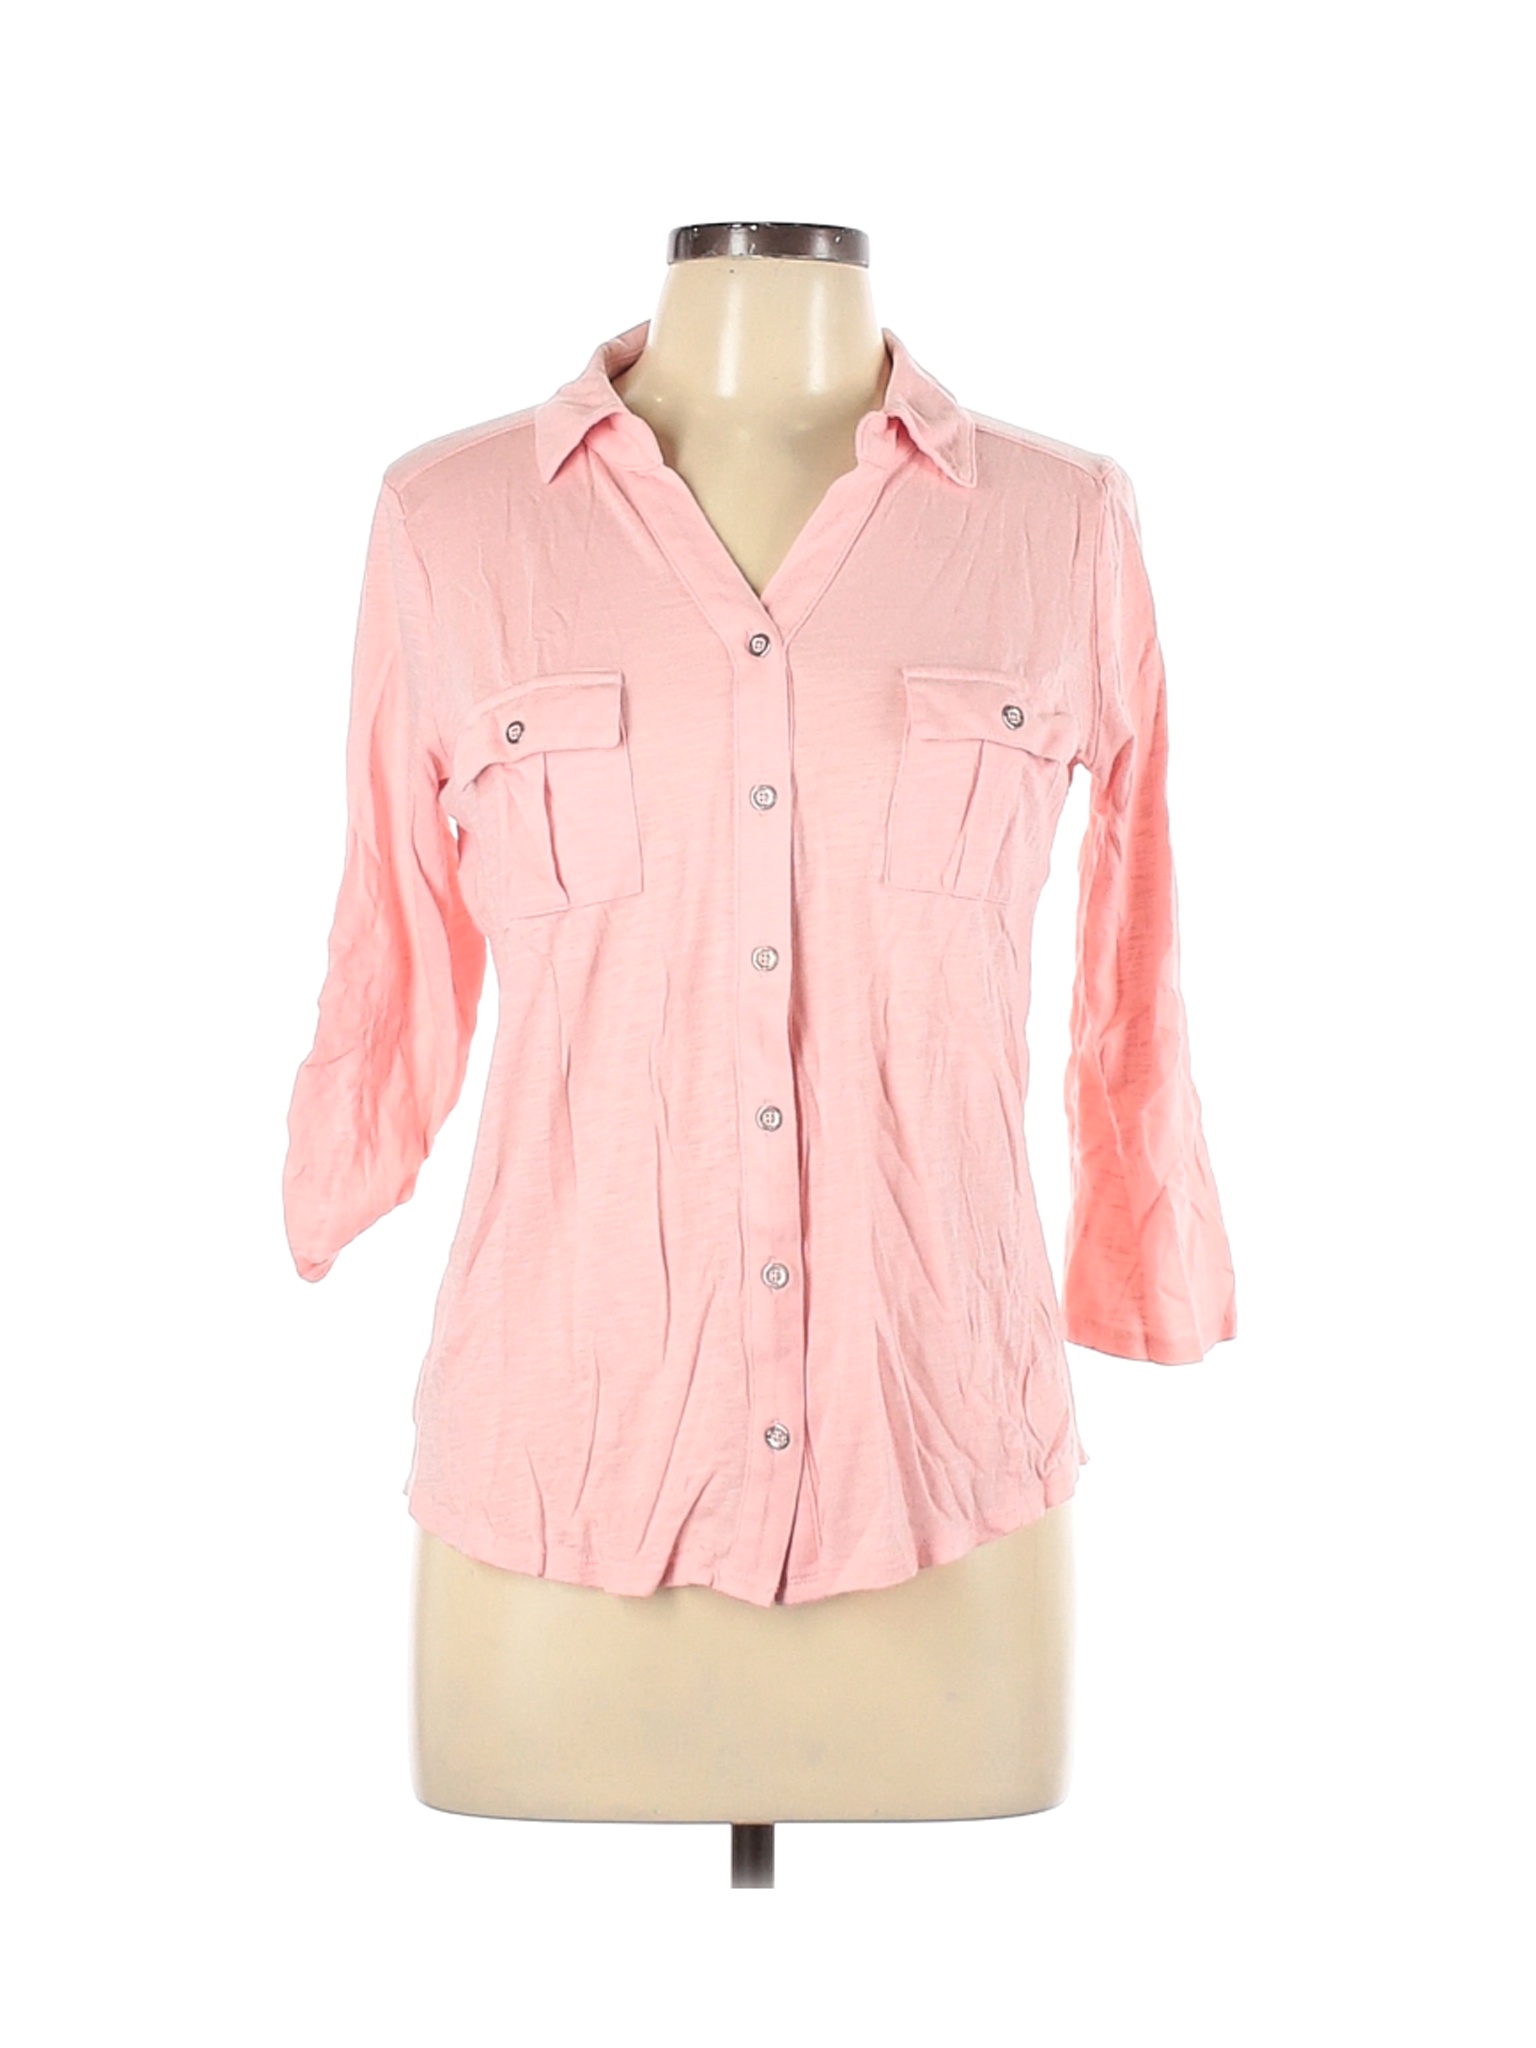 Liz Claiborne Women Pink Long Sleeve Button-Down Shirt L | eBay